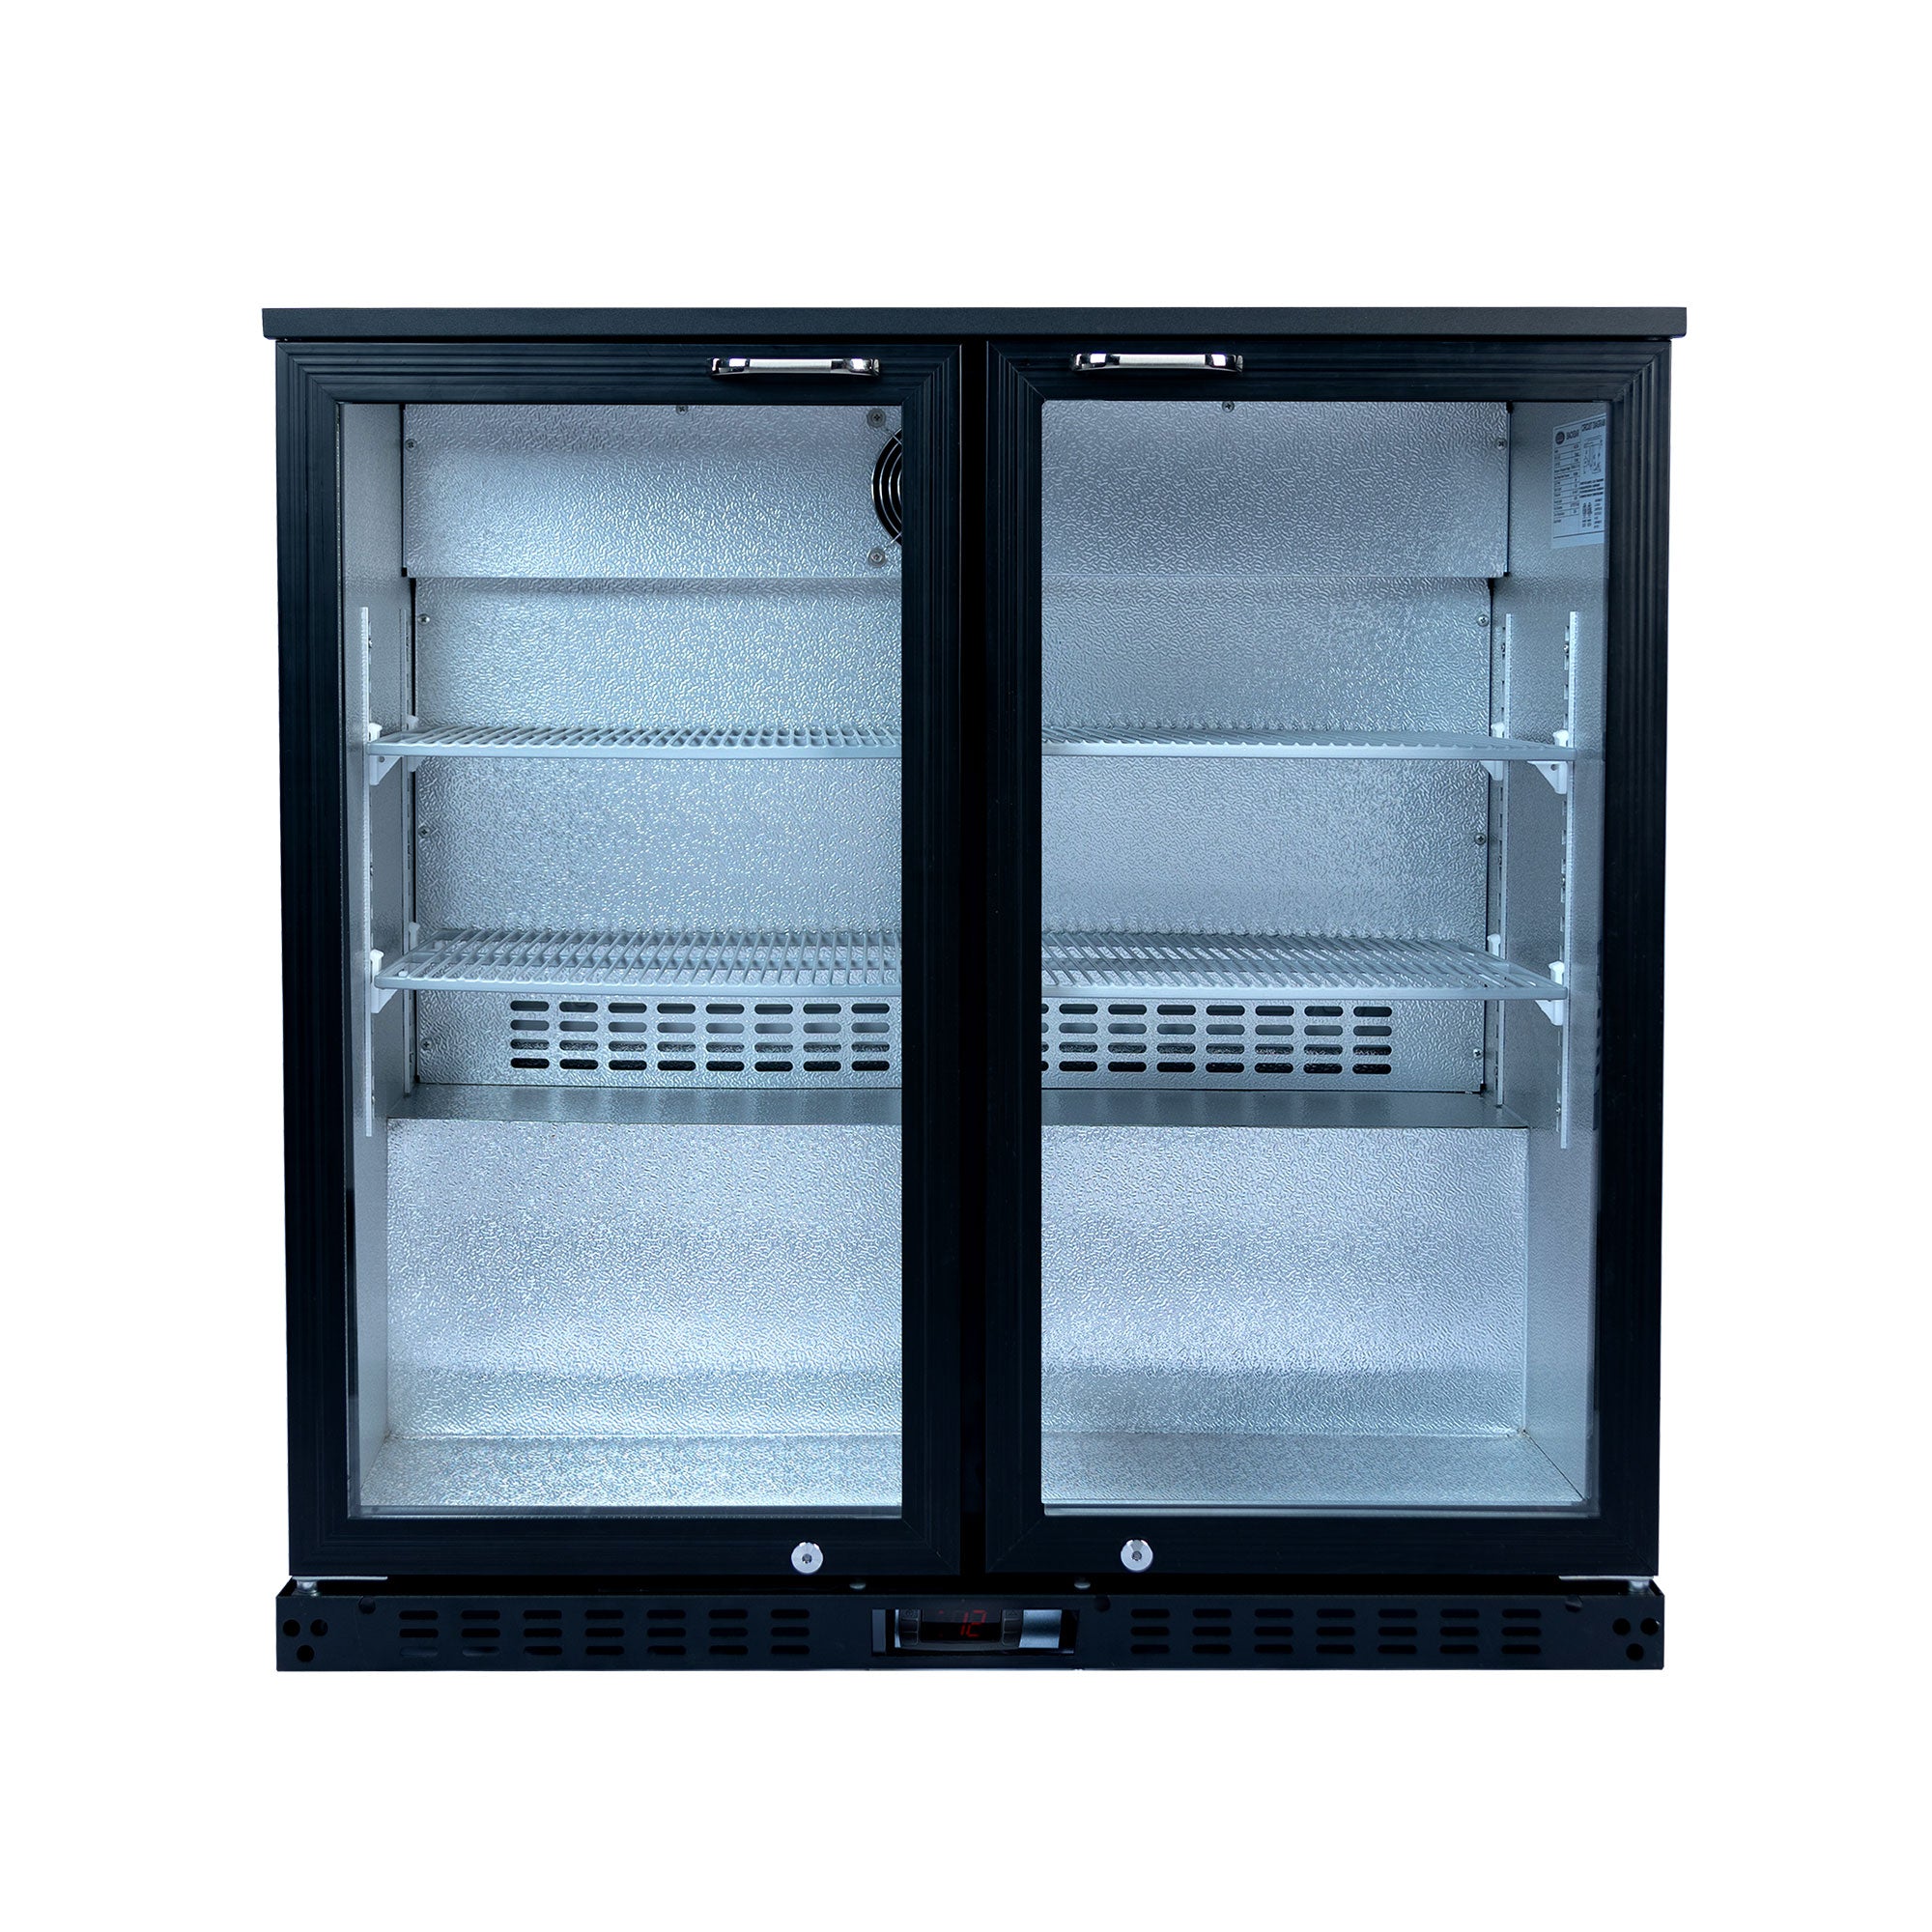 ORIKOOL Beverage Refrigerators Cooler, 35 inch 2 Glass Door Back Bar, 320 Cans Commercial Display Bar Fridge for Beer and Drink 7.4 Cu.Ft